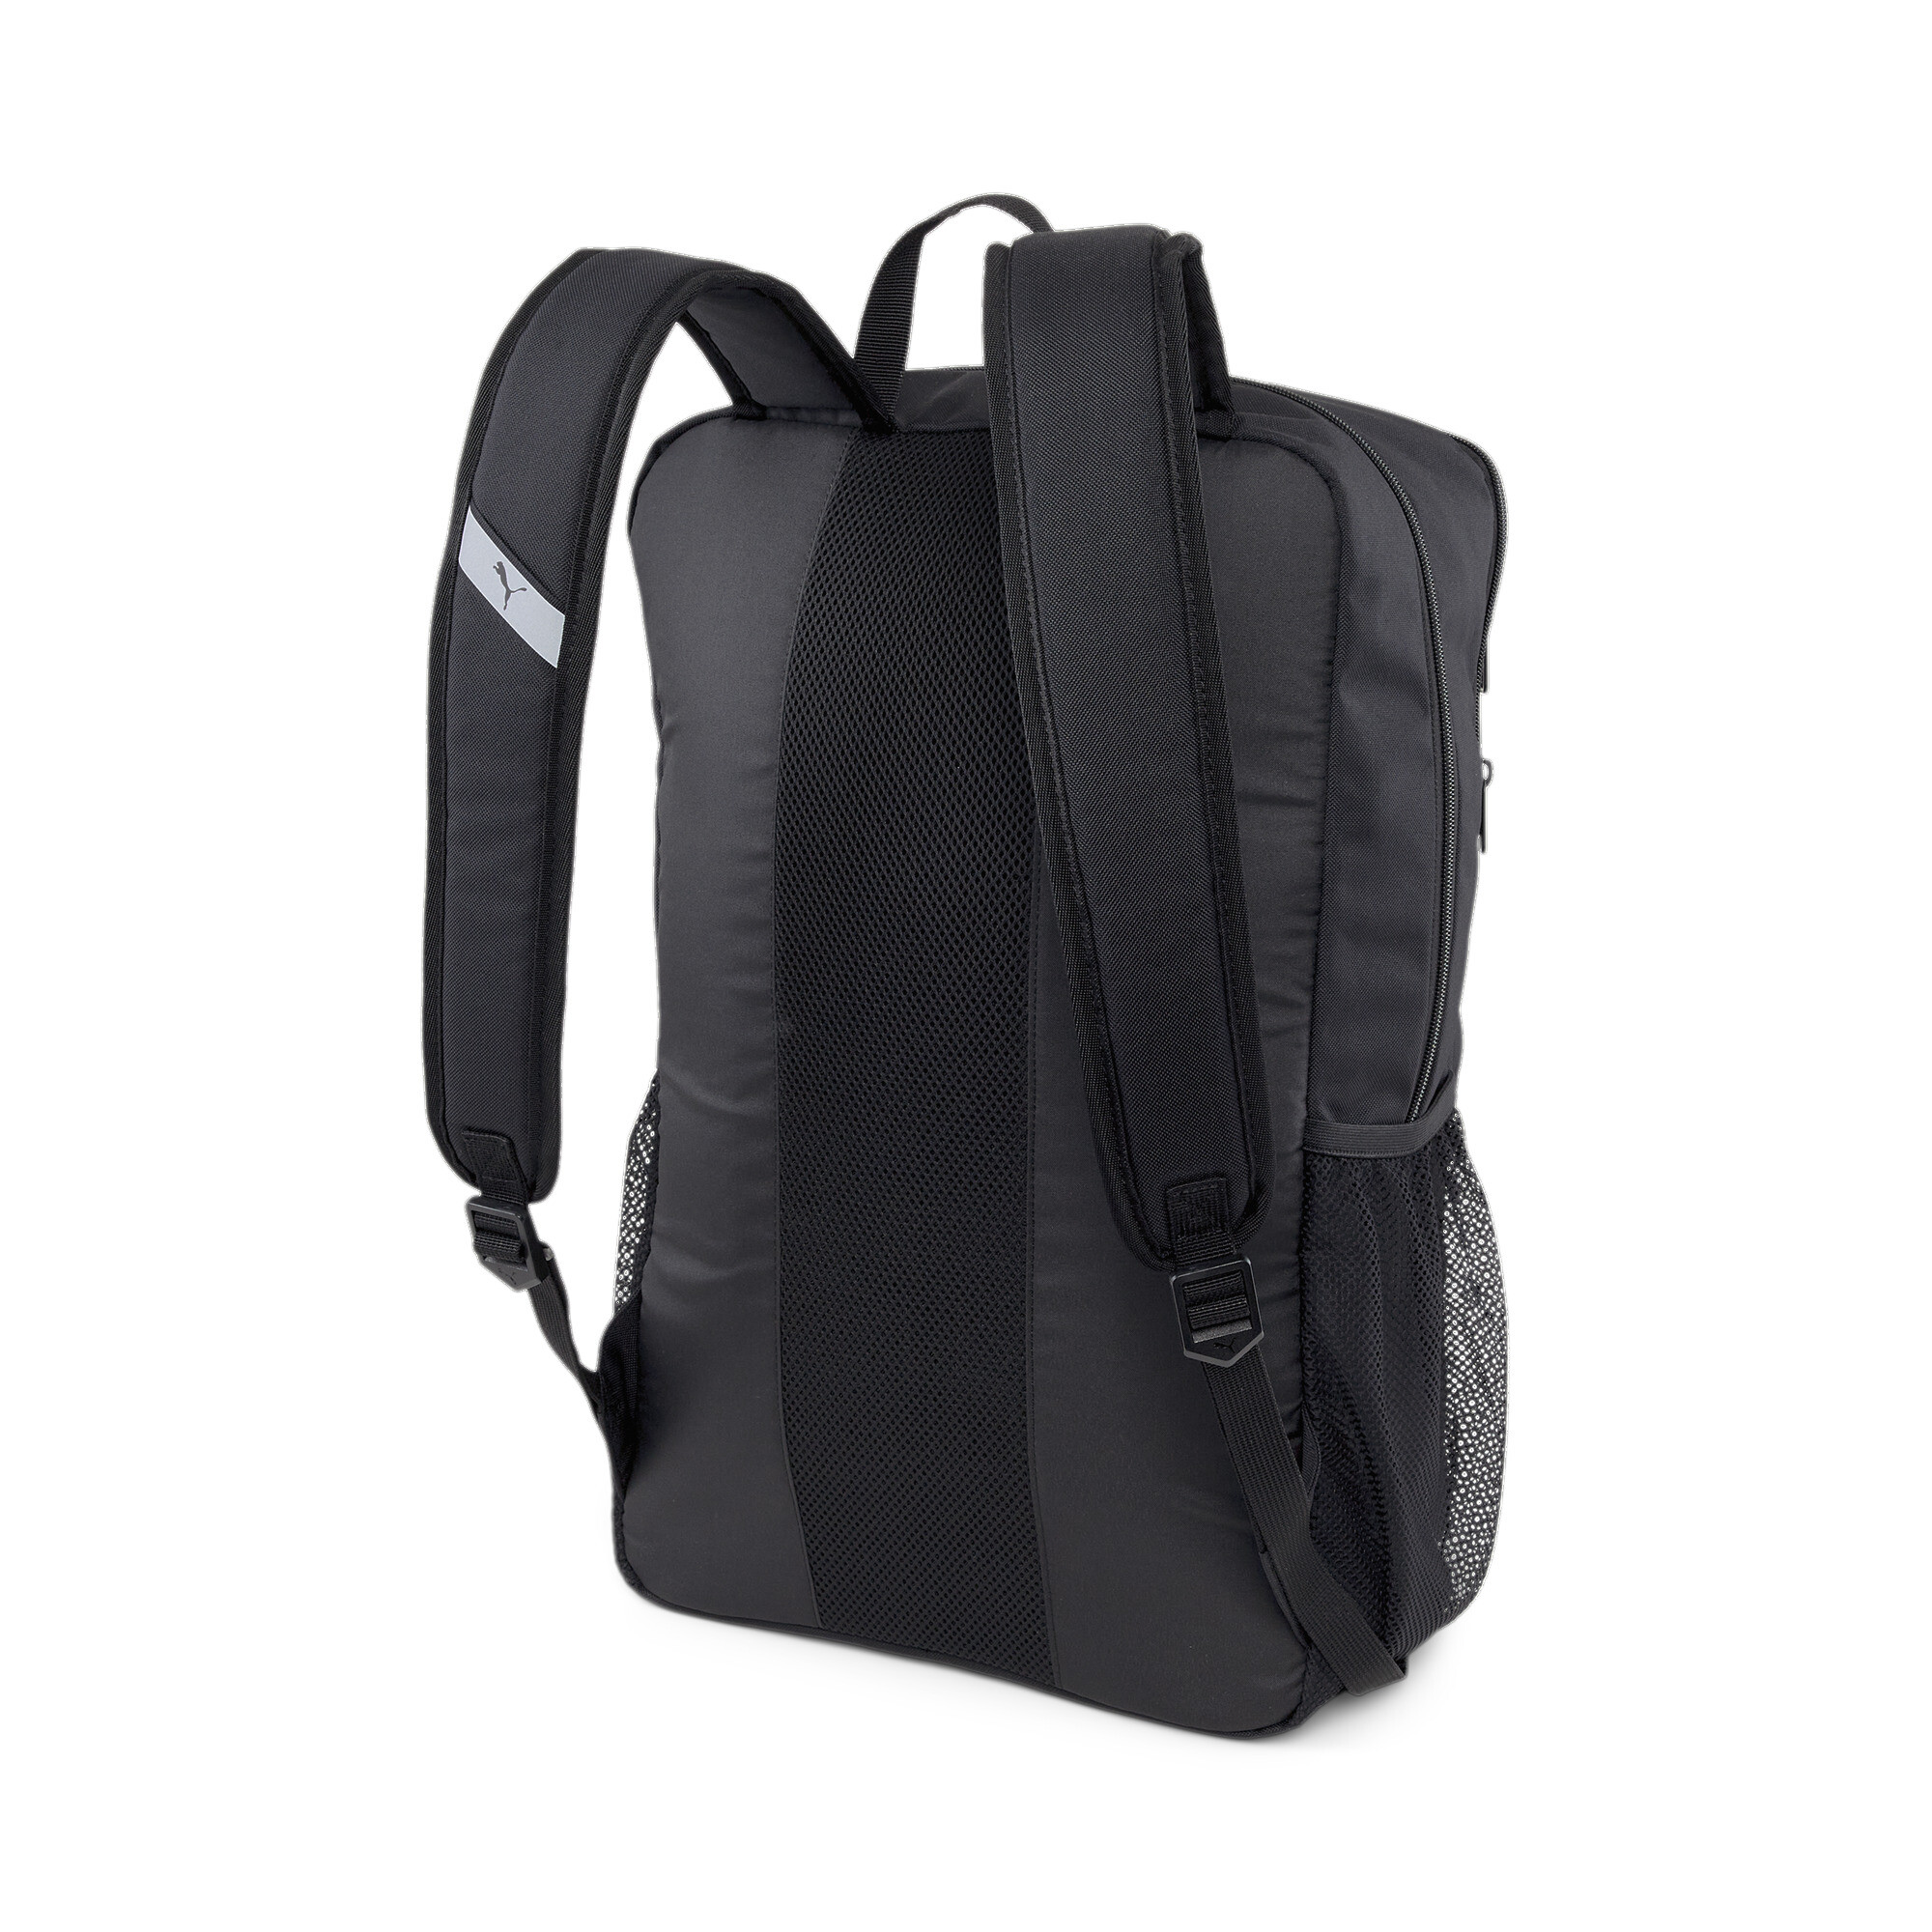 Puma Deck Backpack, Black, Accessories